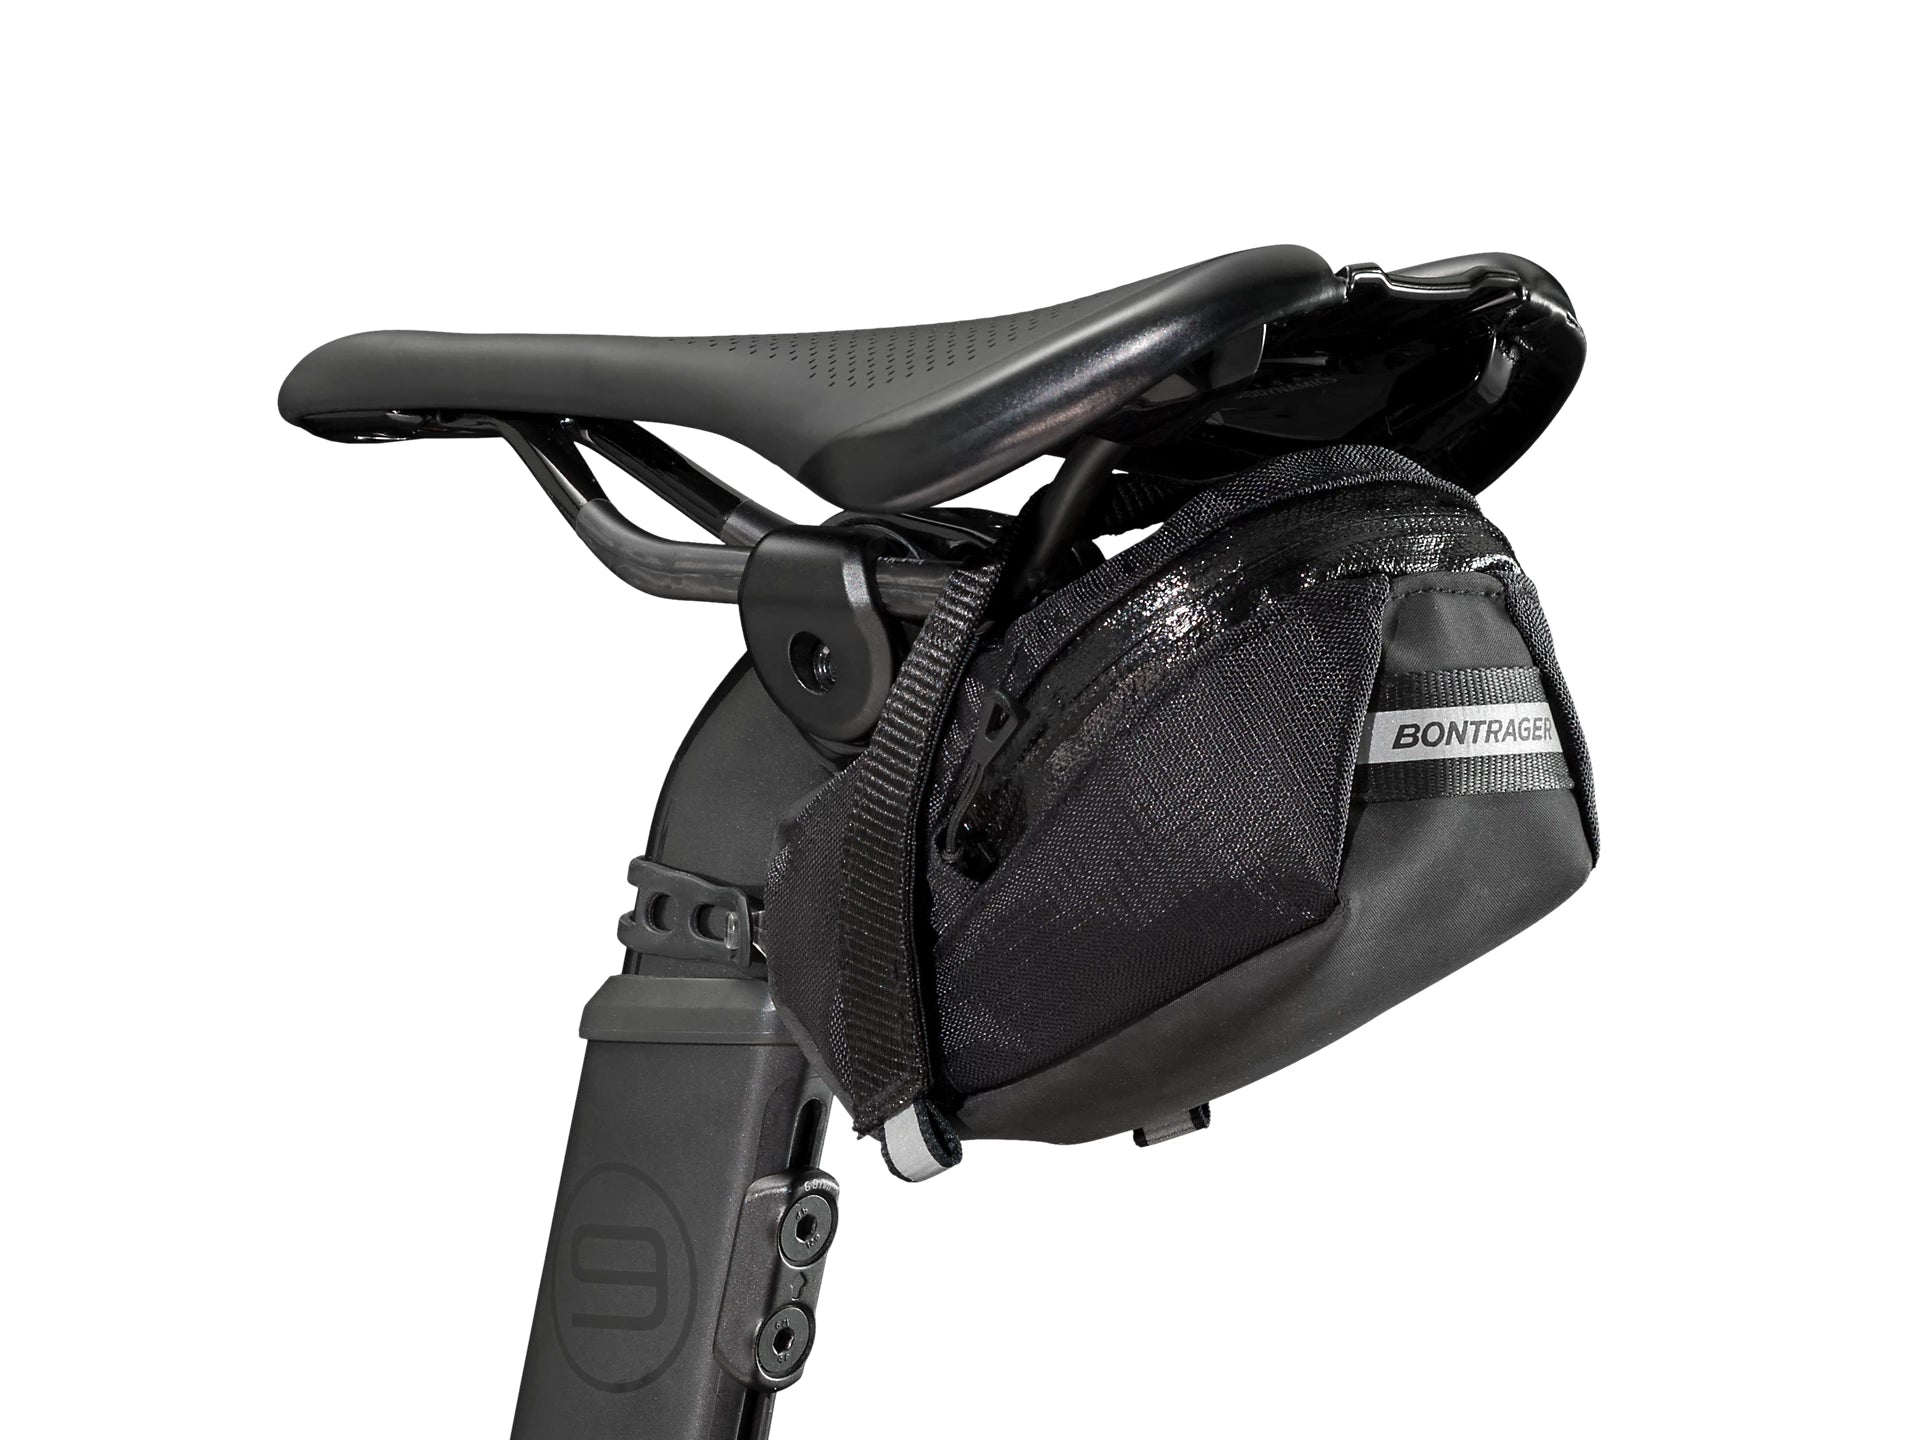 Bontrager Elite Small Seatpack on back of bike seat on white background